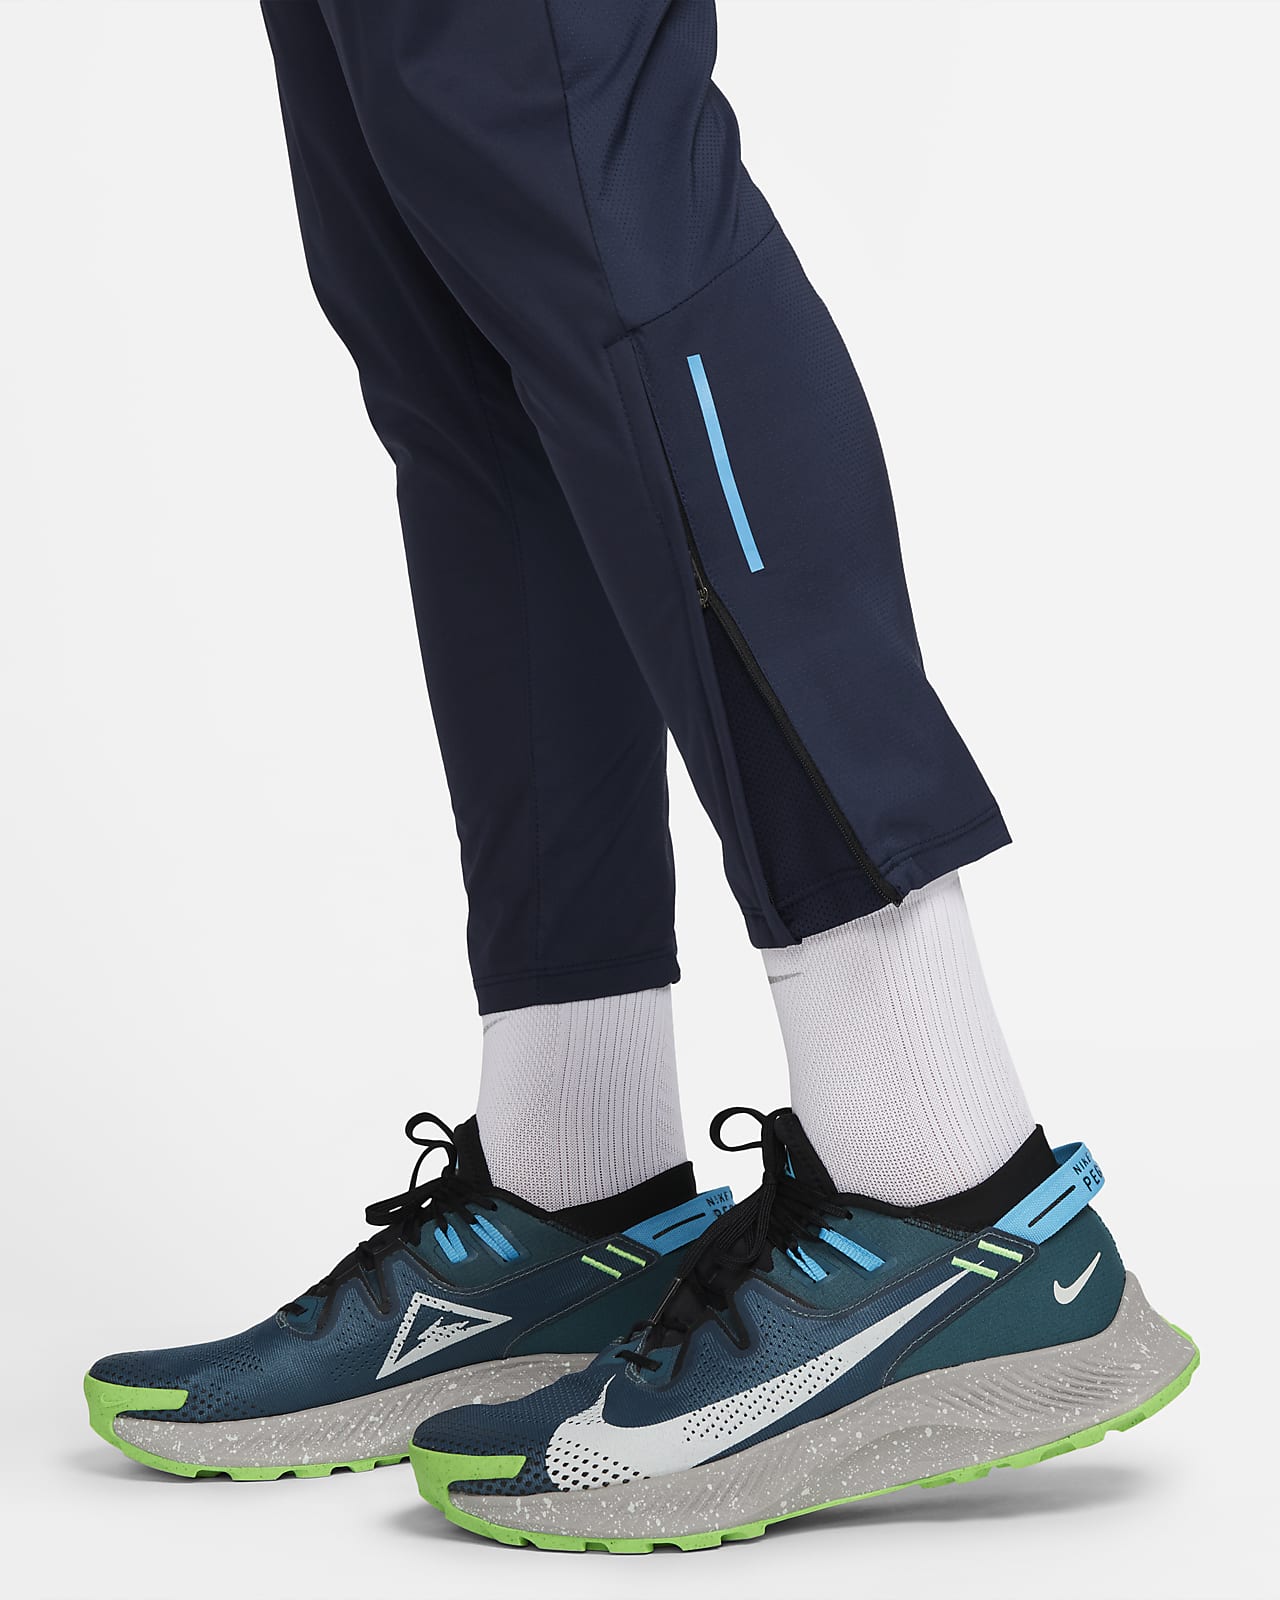 Nike Dri-FIT Phenom Elite Men's Knit Trail Running Pants